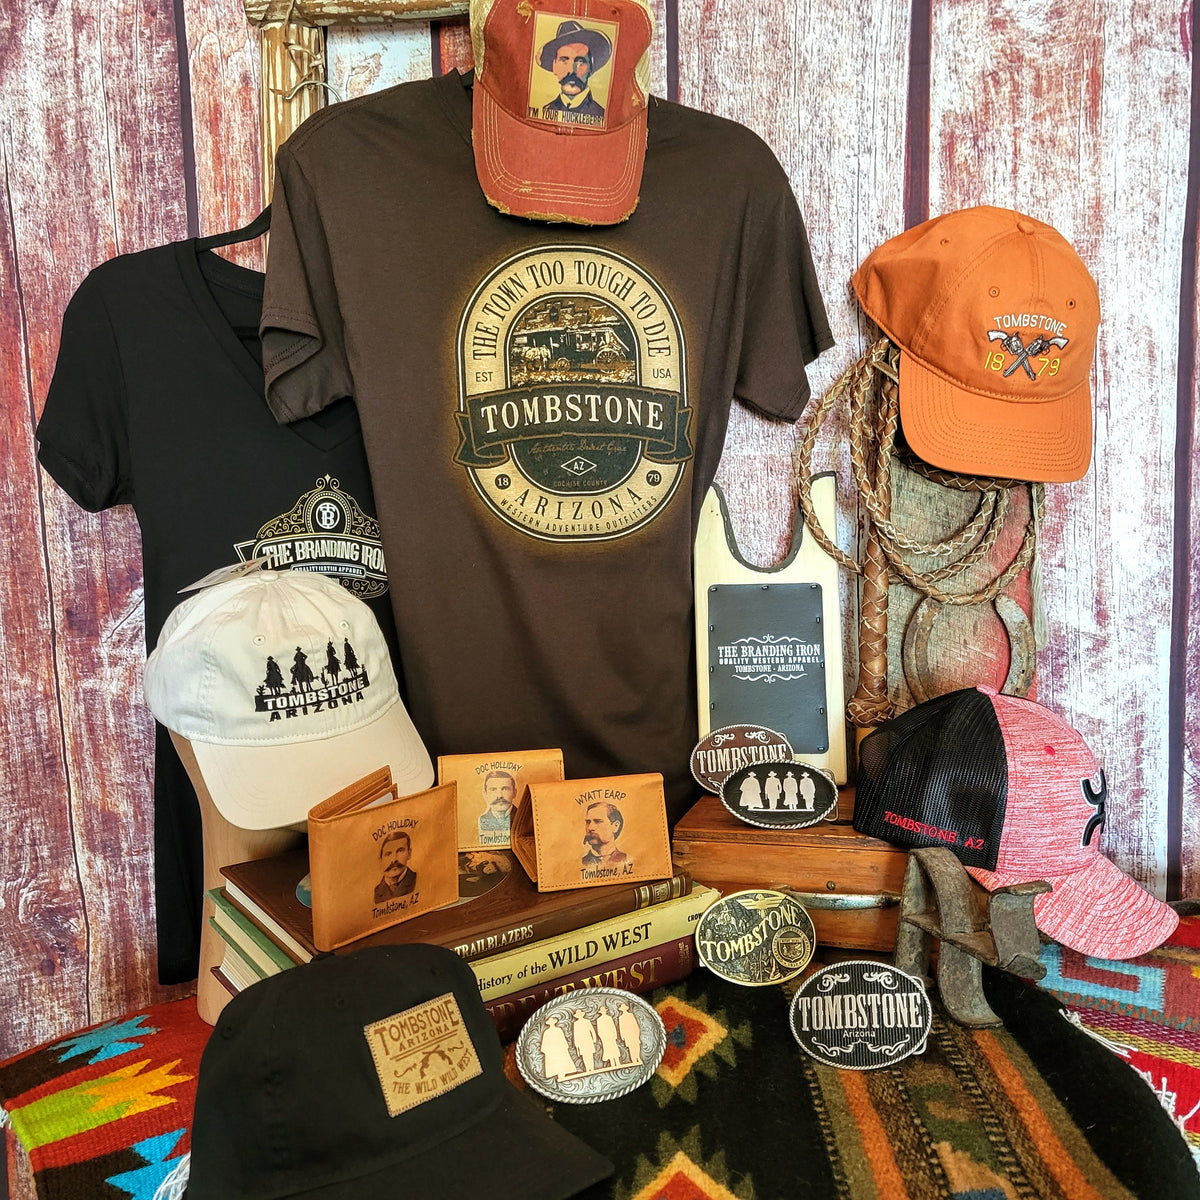 Tombstone/Branding Iron Merchandise – The Branding Iron-Tombstone, AZ